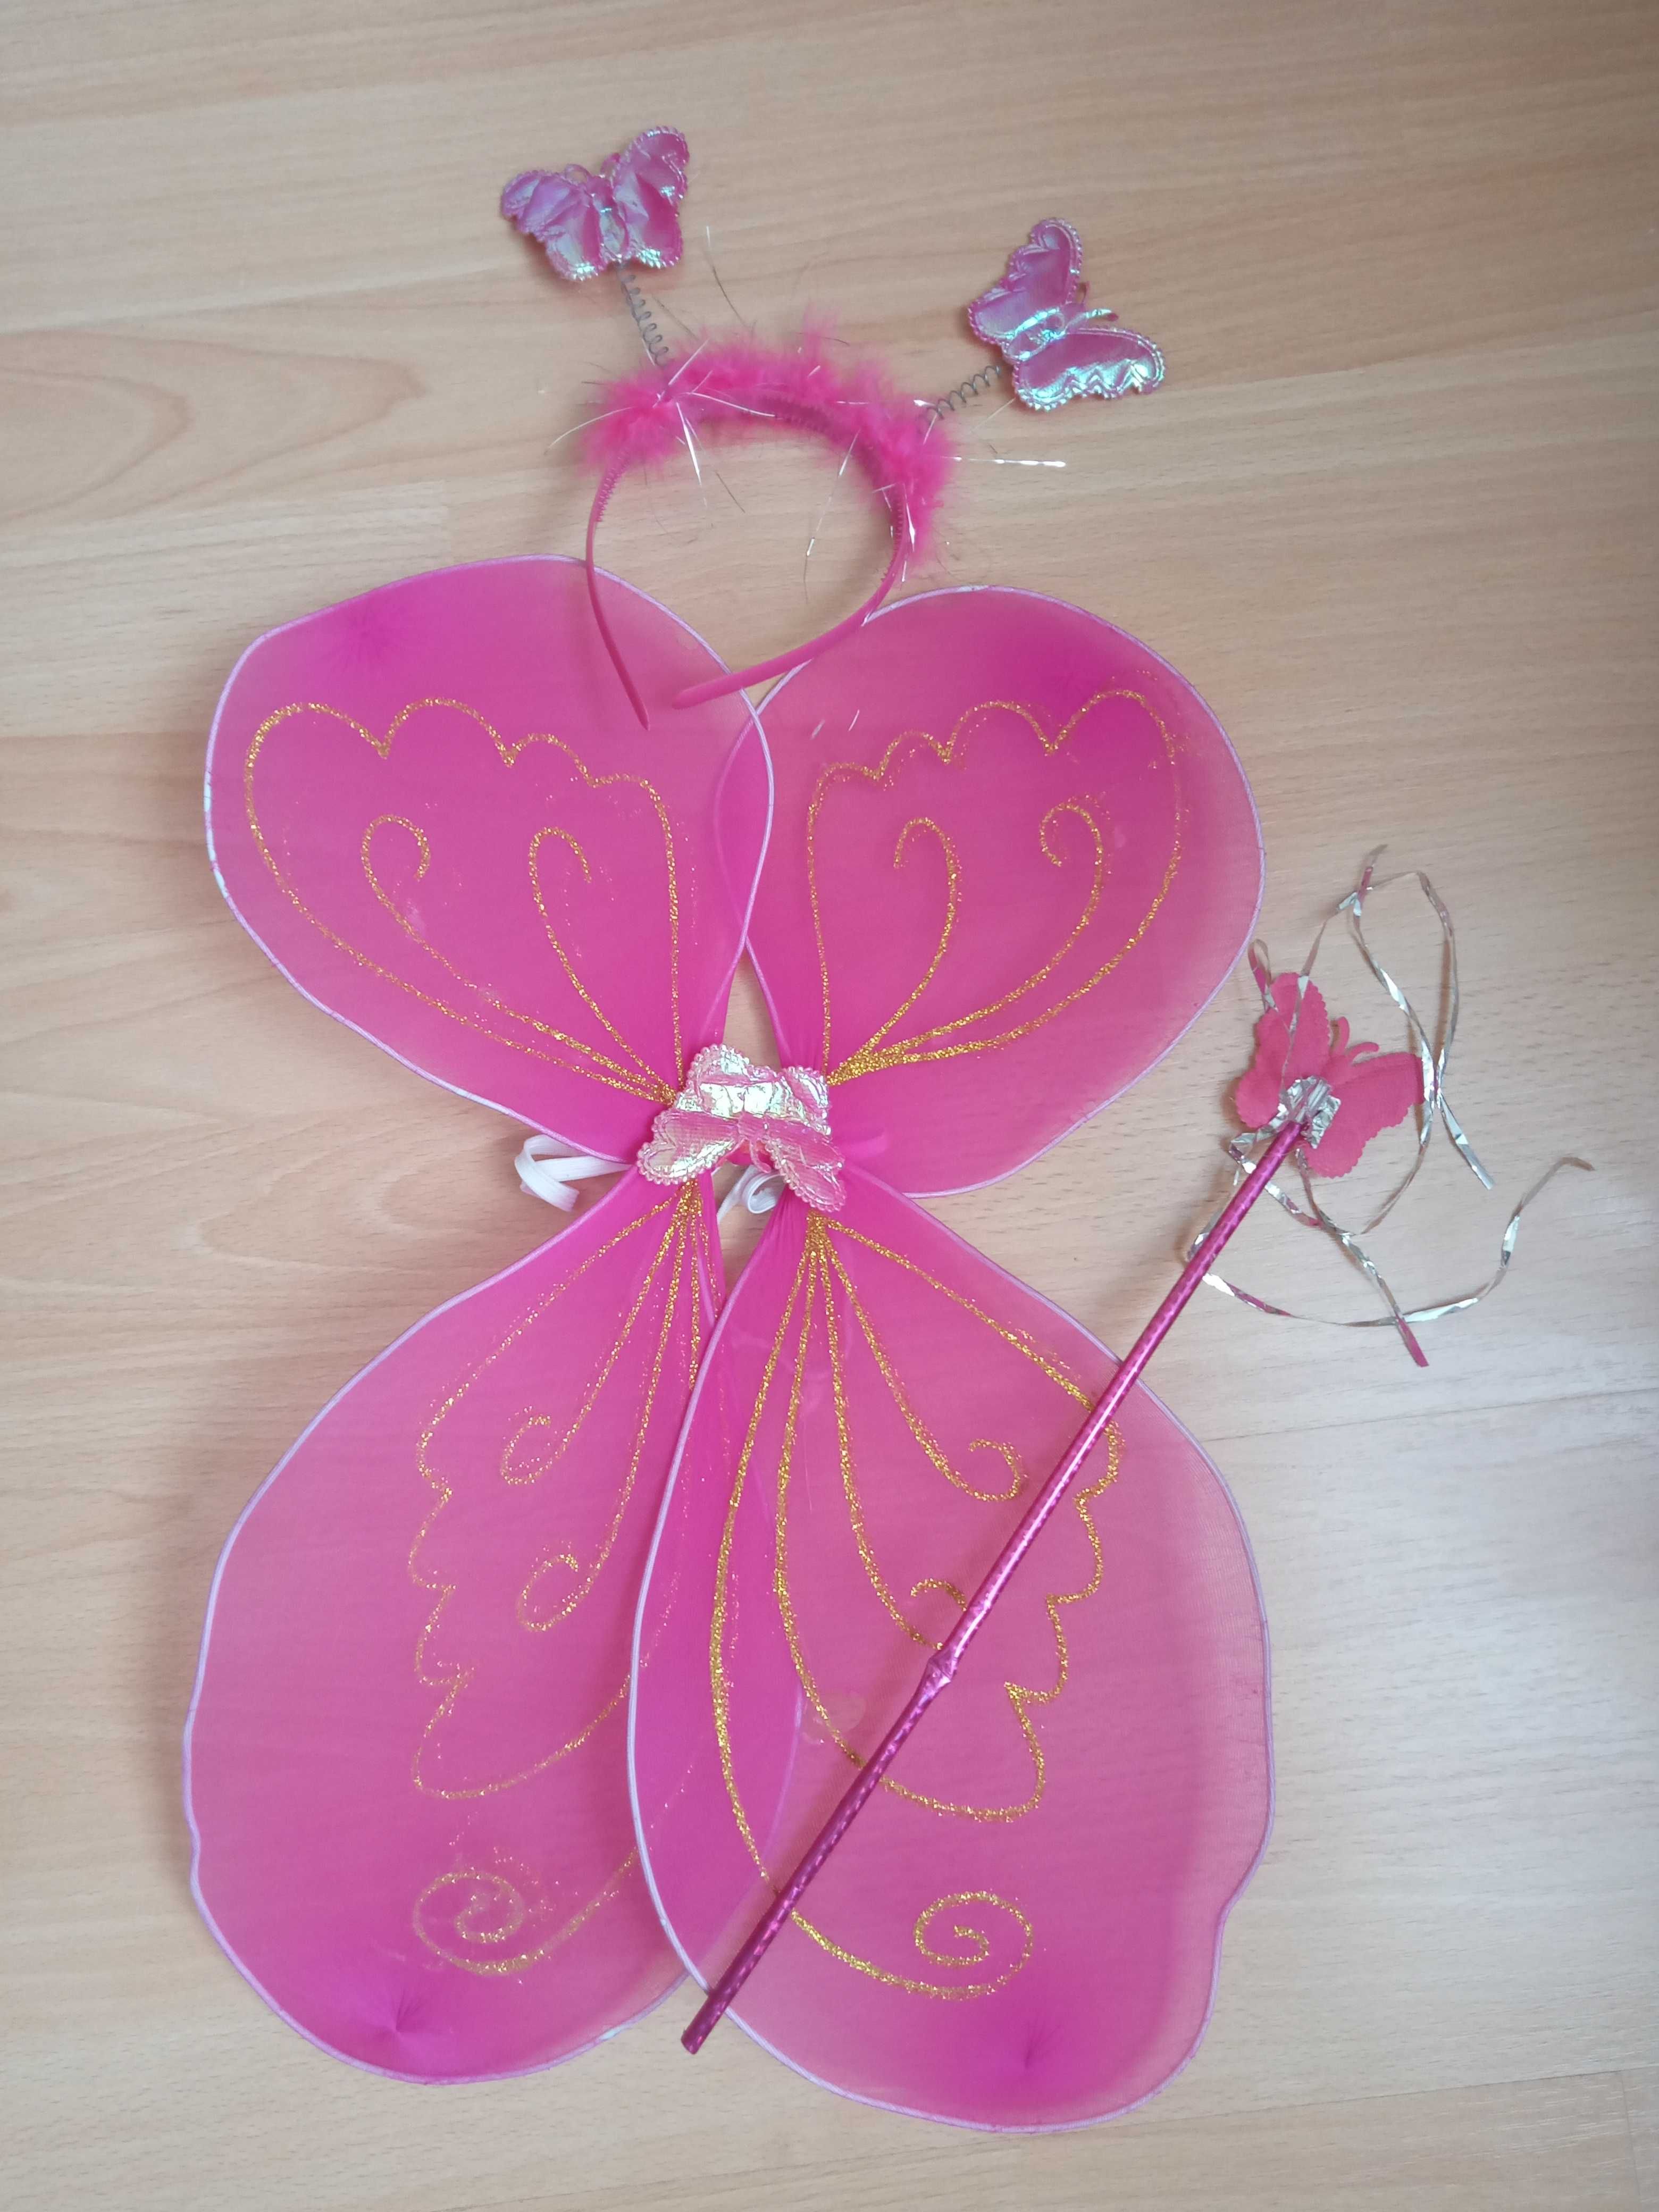 костюм феи, крылья феи, три предмета бабочка, ободок и палочка.